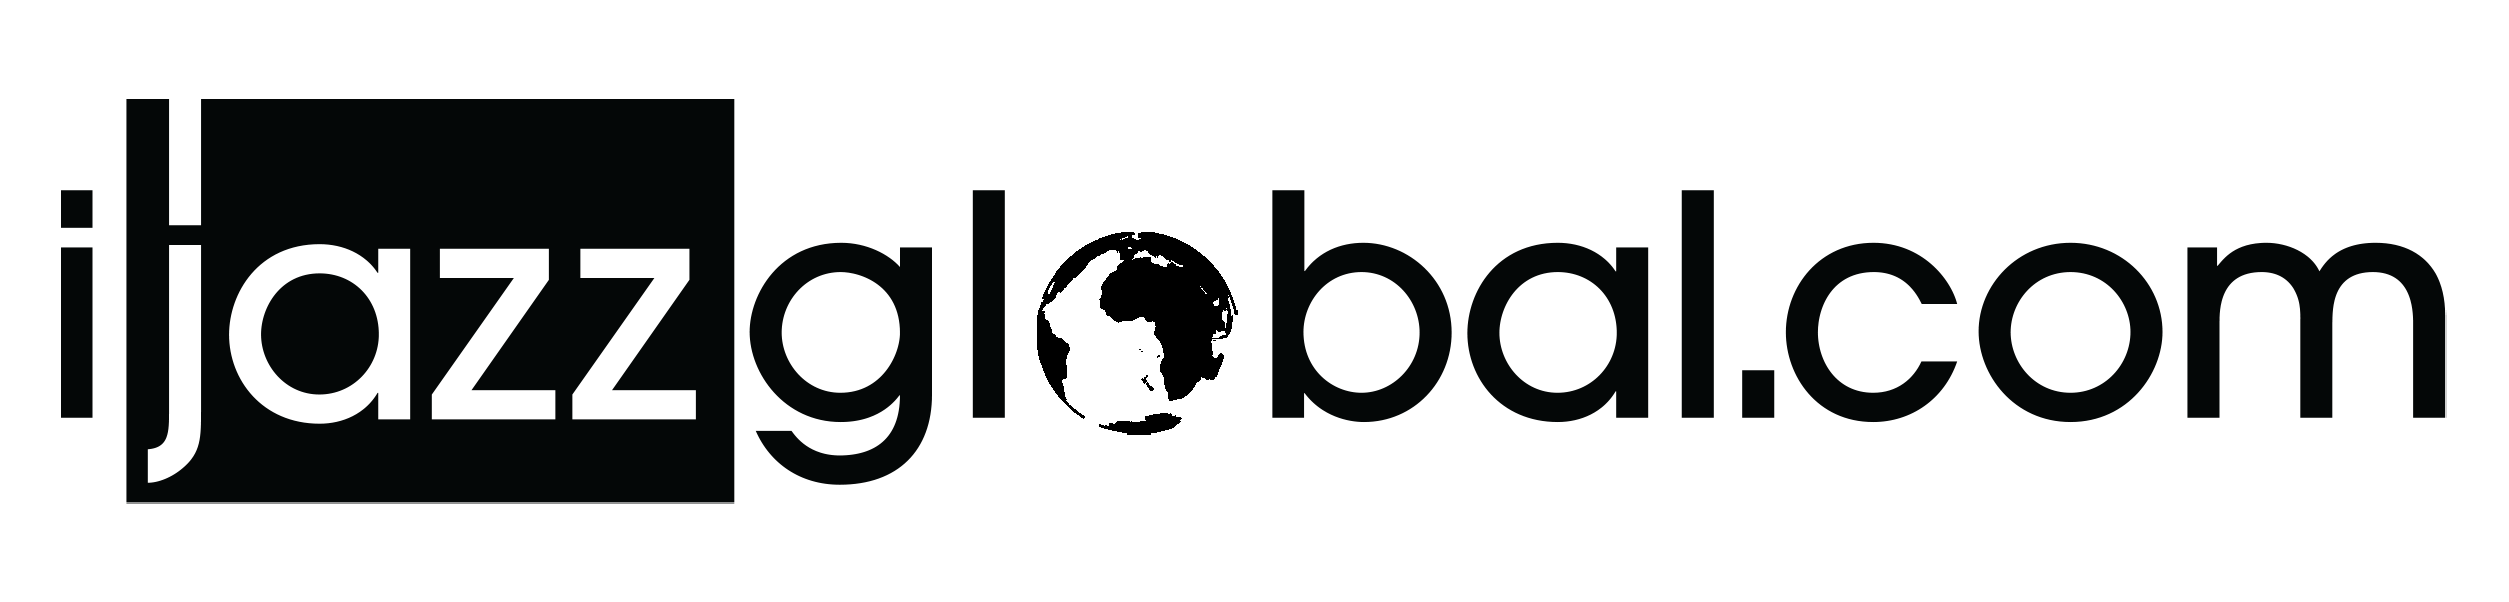 ijazzglobal.com logo with spinning world